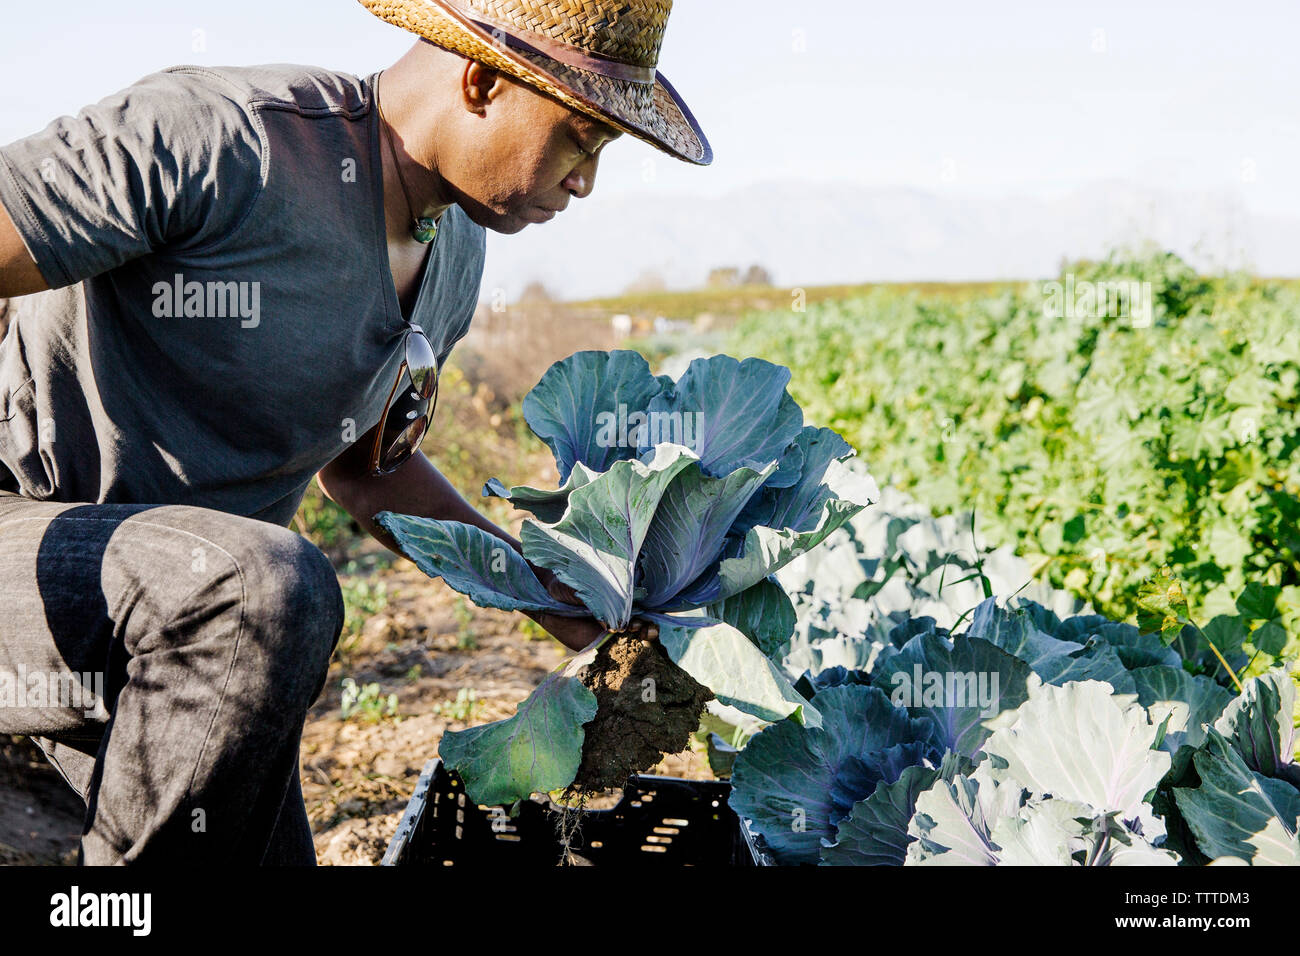 Farmer examining leaf vegetables on farm Stock Photo